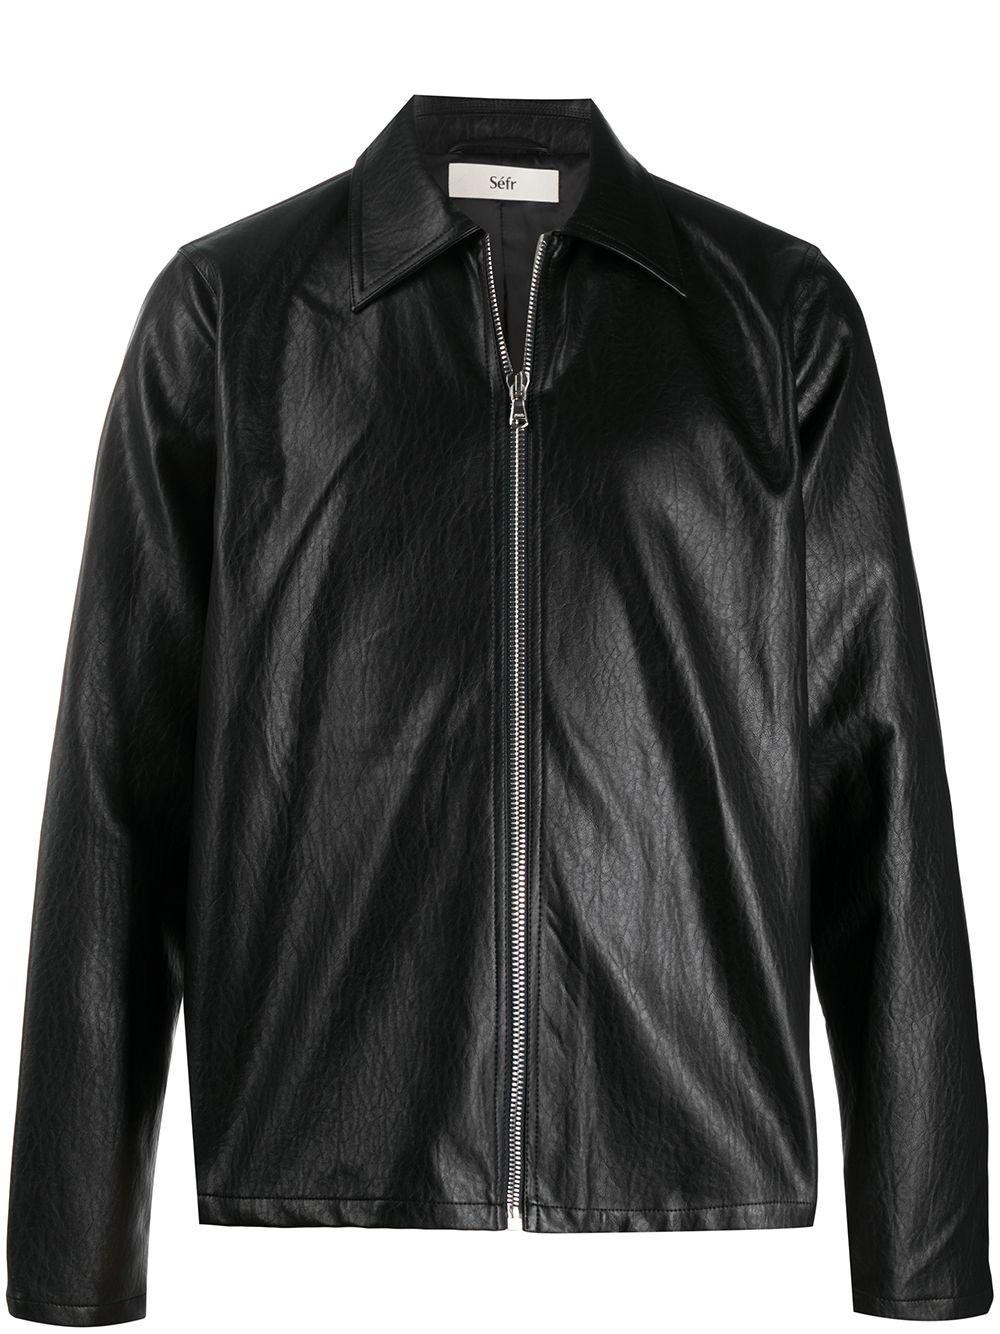 Séfr Truth Zip-up Jacket in Black for Men - Lyst